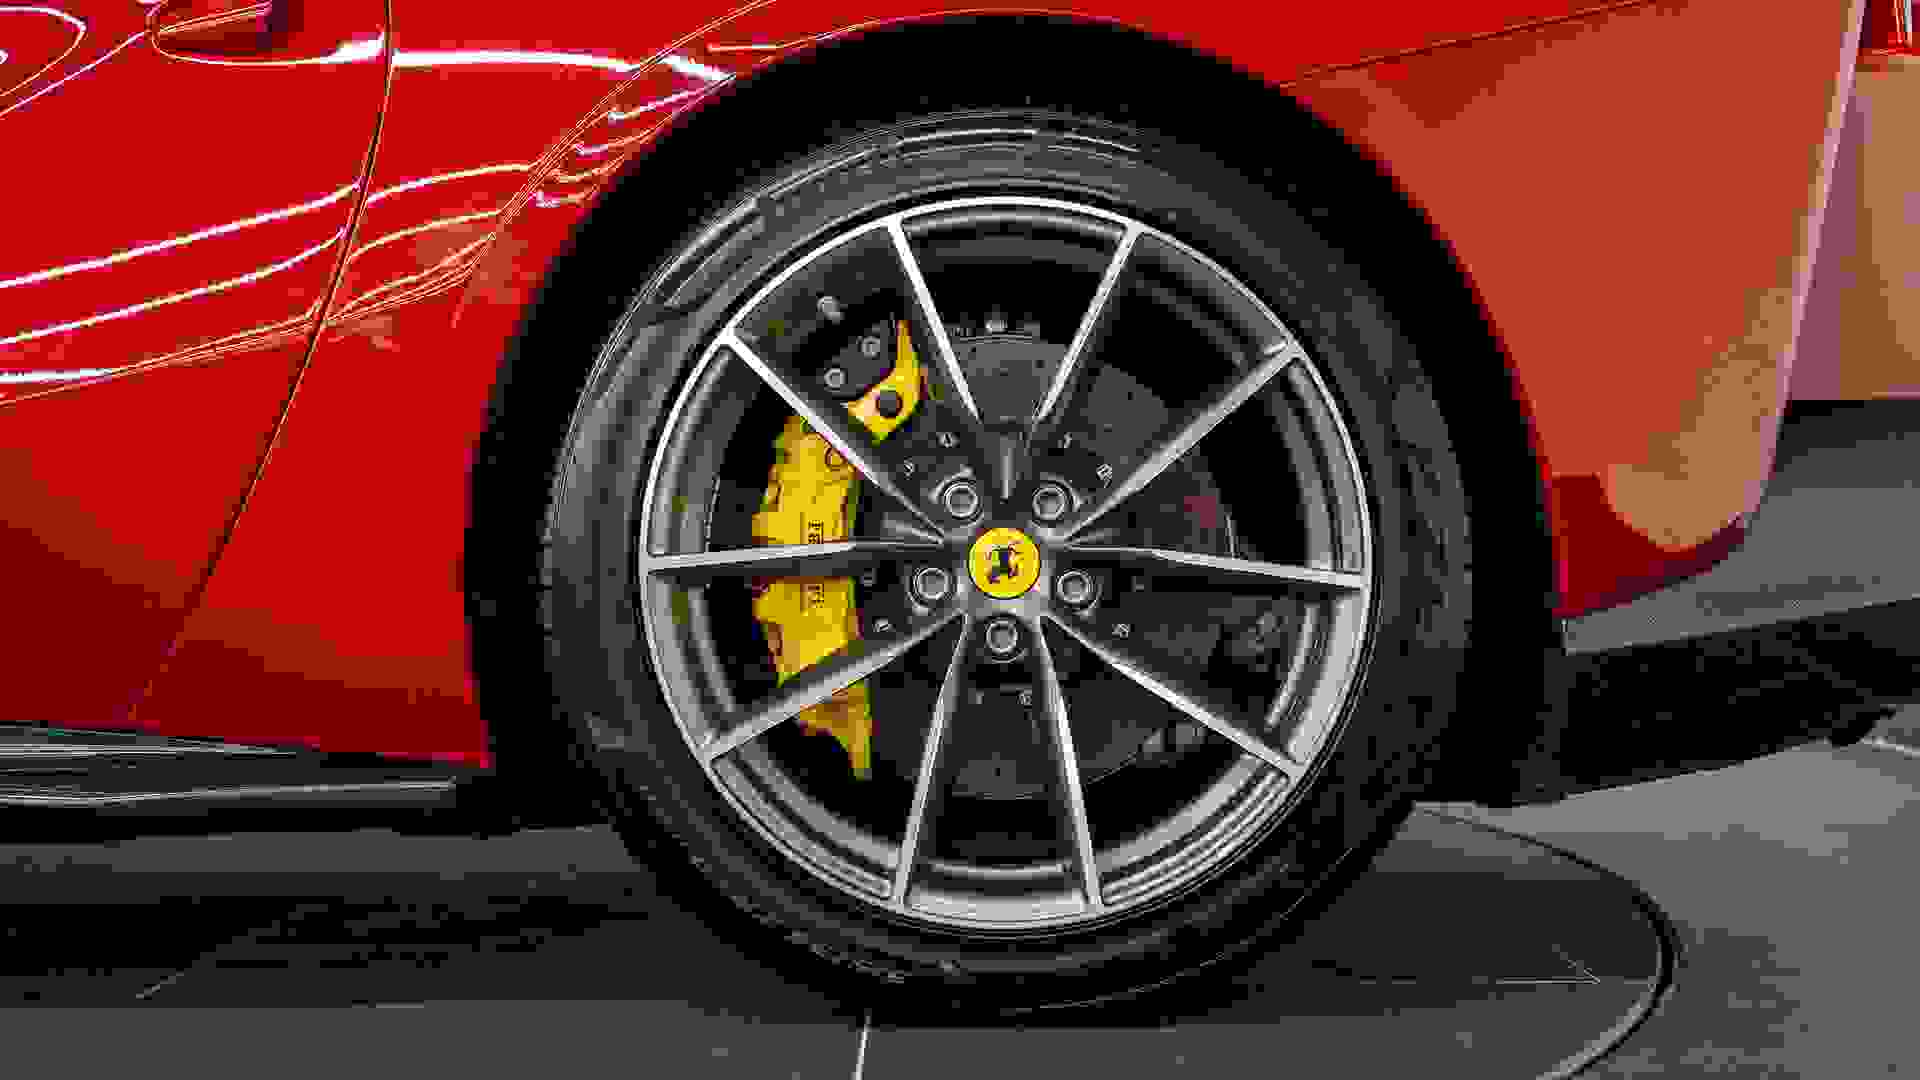 Ferrari 812 Photo bf35f25d-2d75-47f0-a5e2-aca83dc0a606.jpg